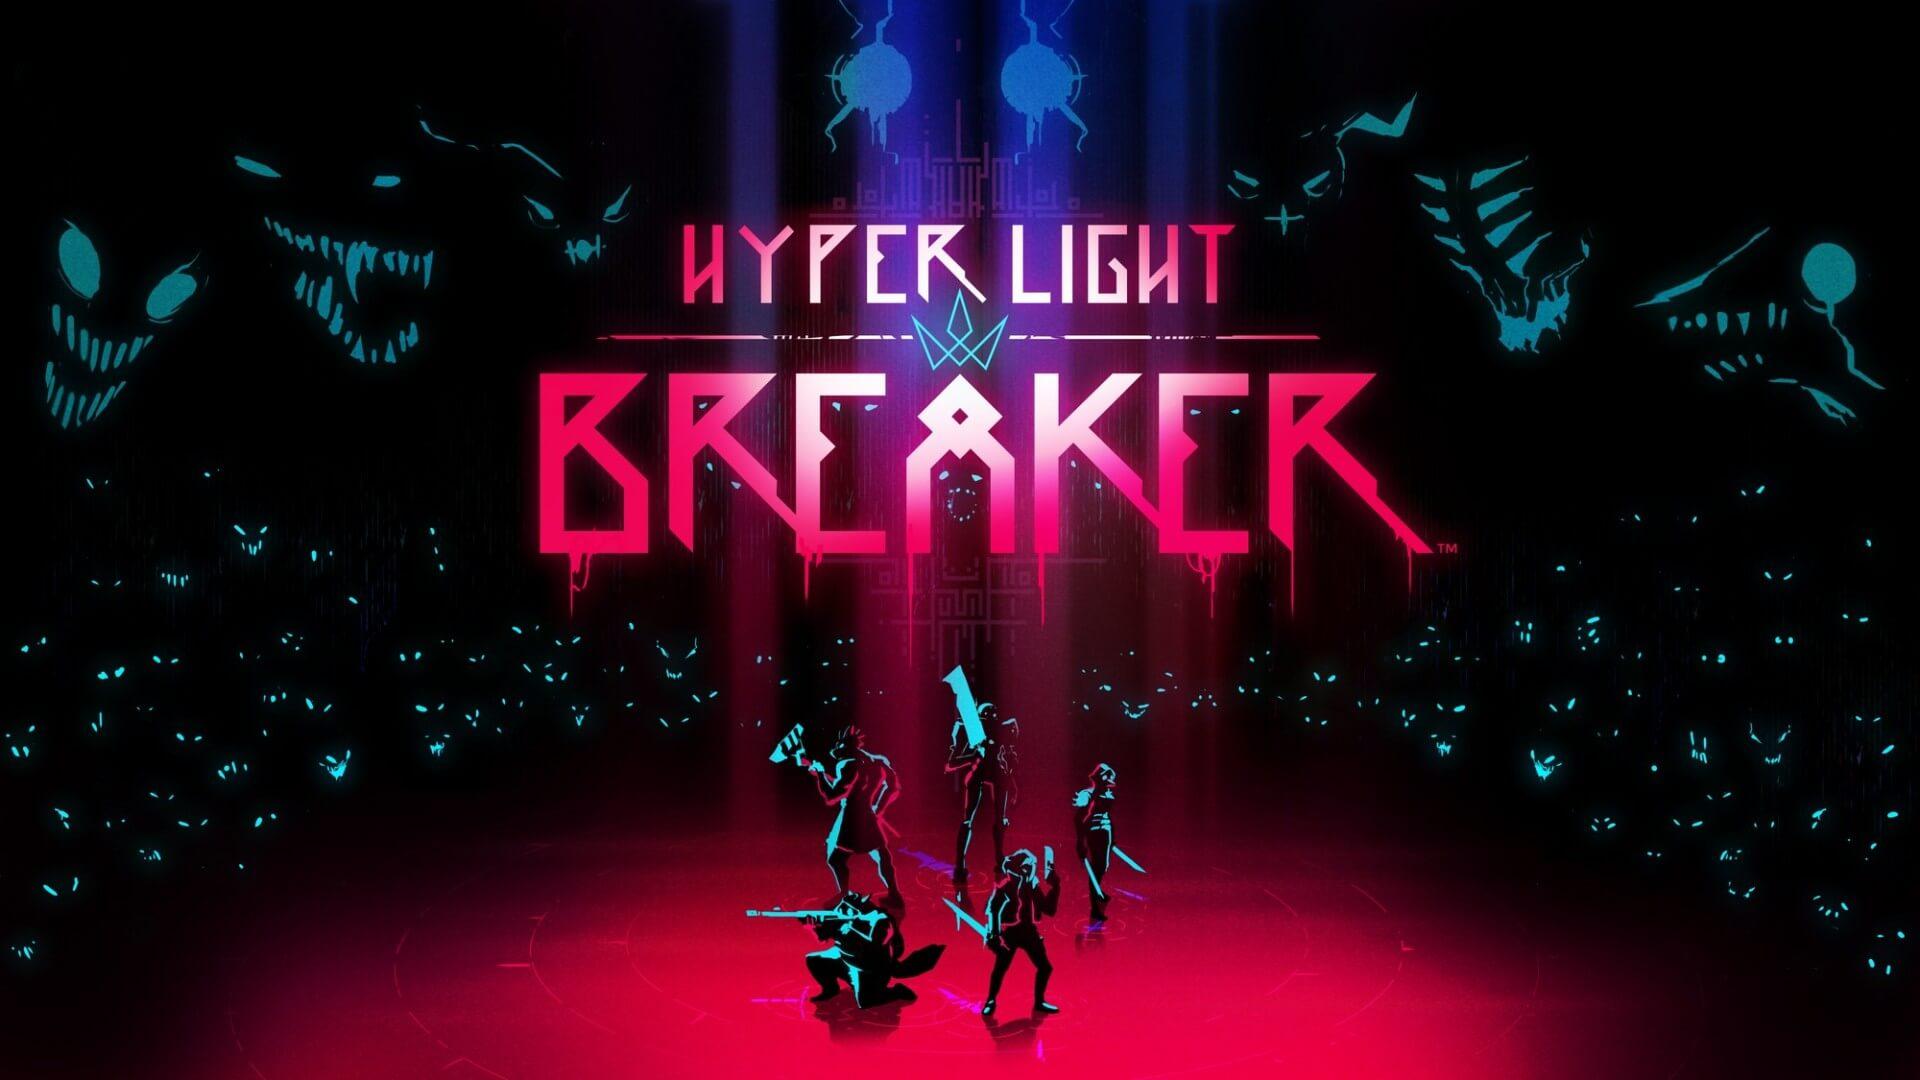 hyperlightbreaker keyart bloodcircle